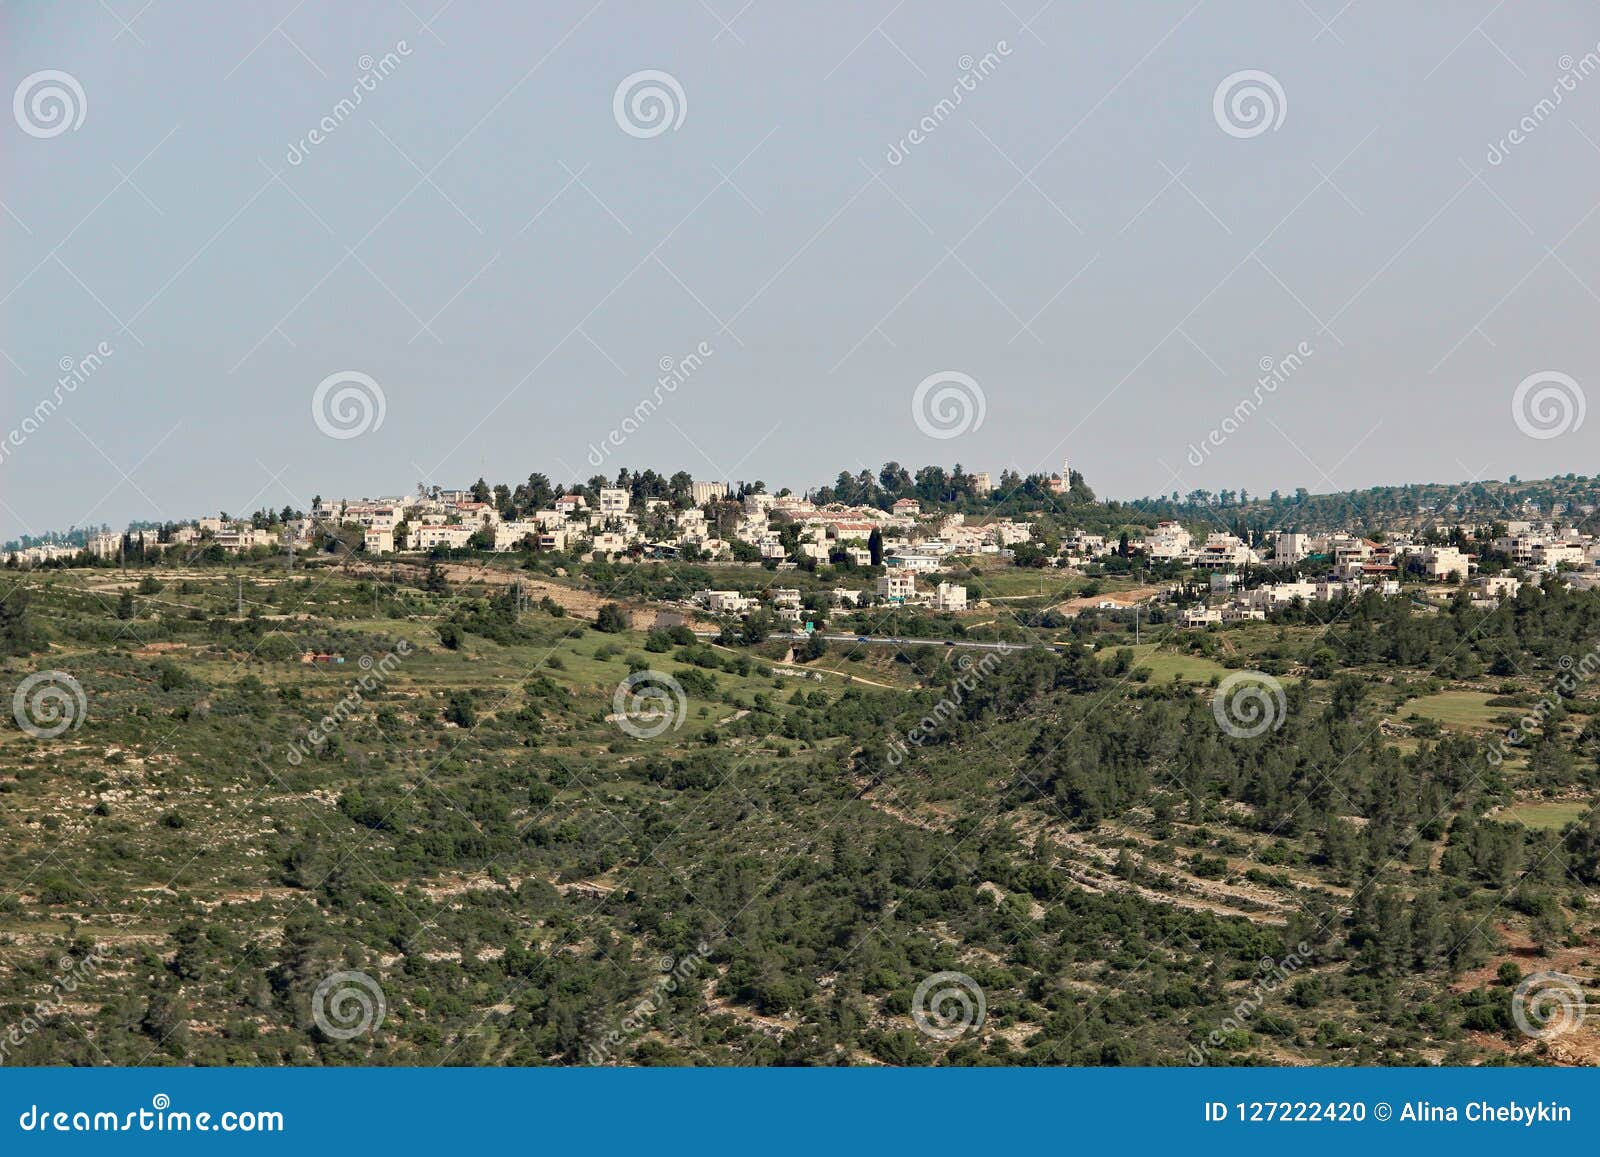 Green mountains with settlements near Jerusalem, Israel